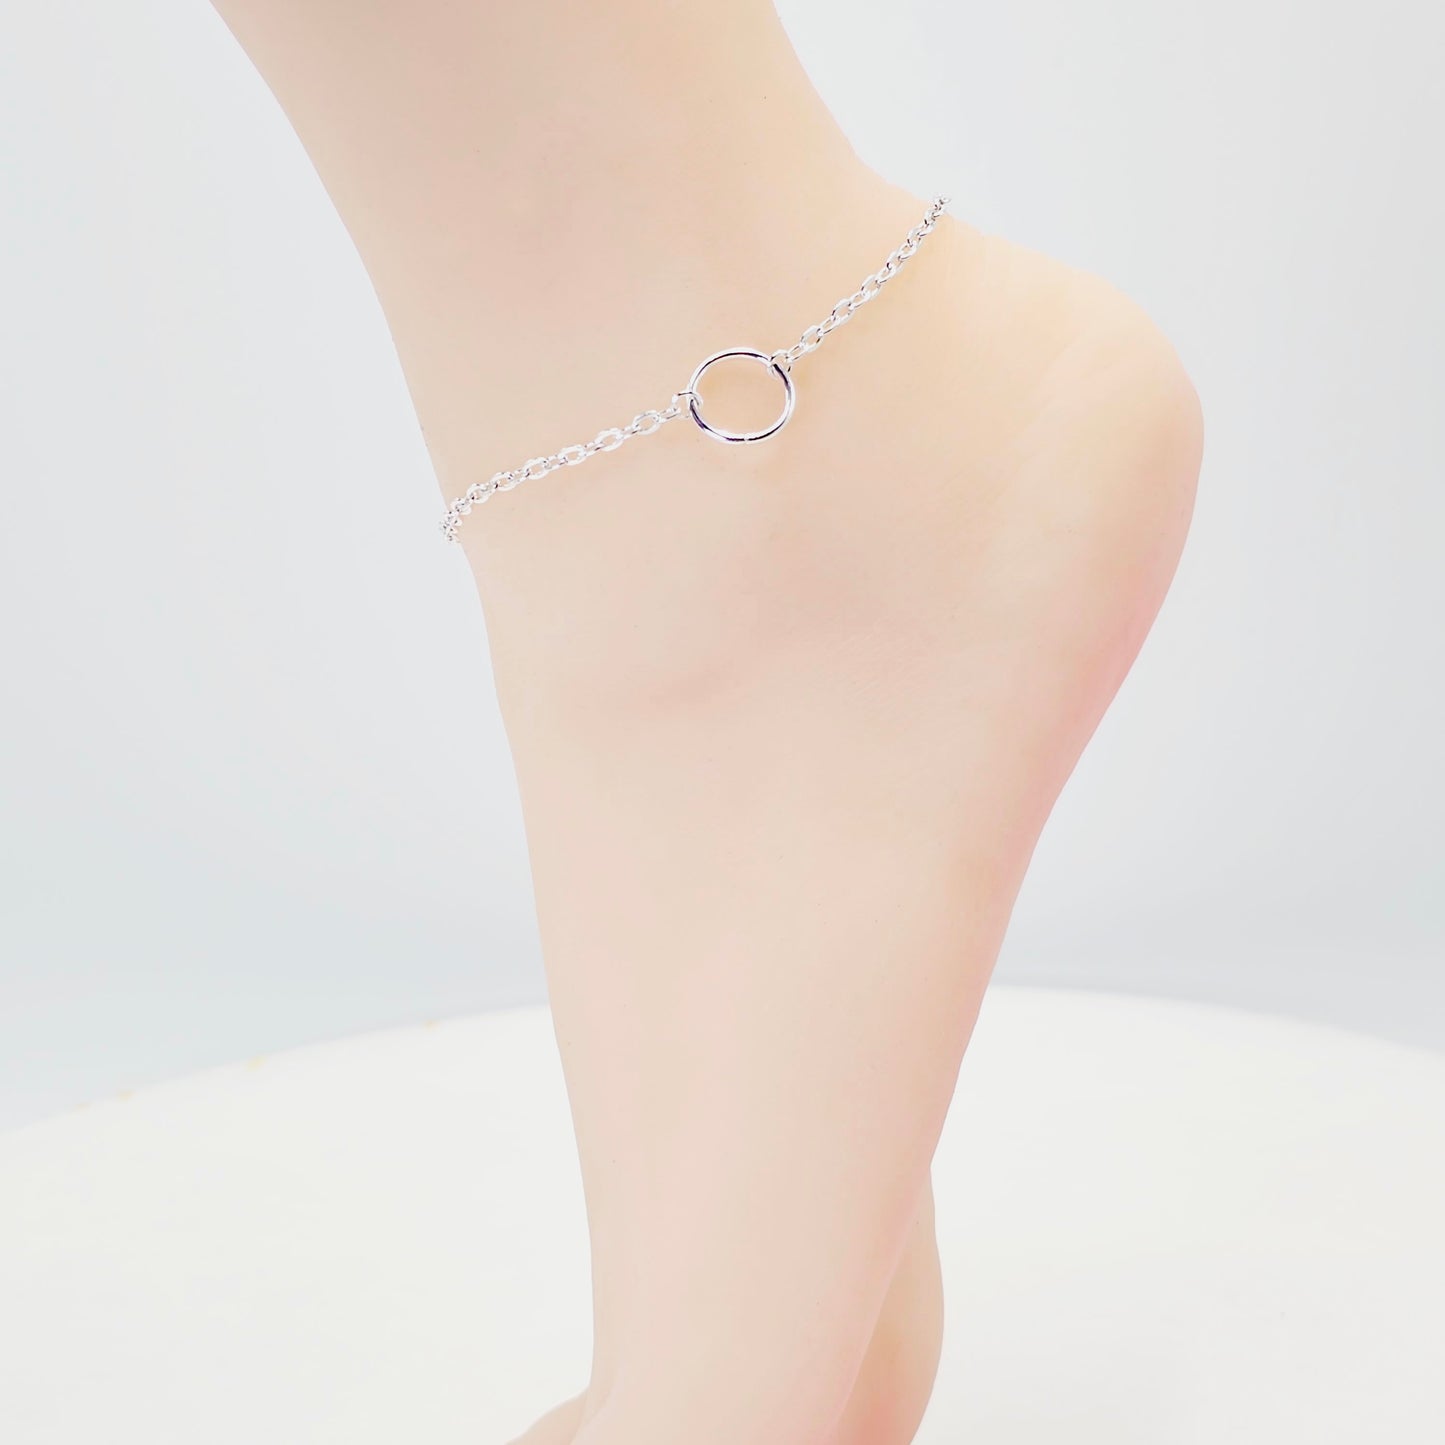 Silver Circle of O Anklet. Minimalist, BDSM, Ankle Bracelet for Submissive, DDLG, Slave, Discreet Collar